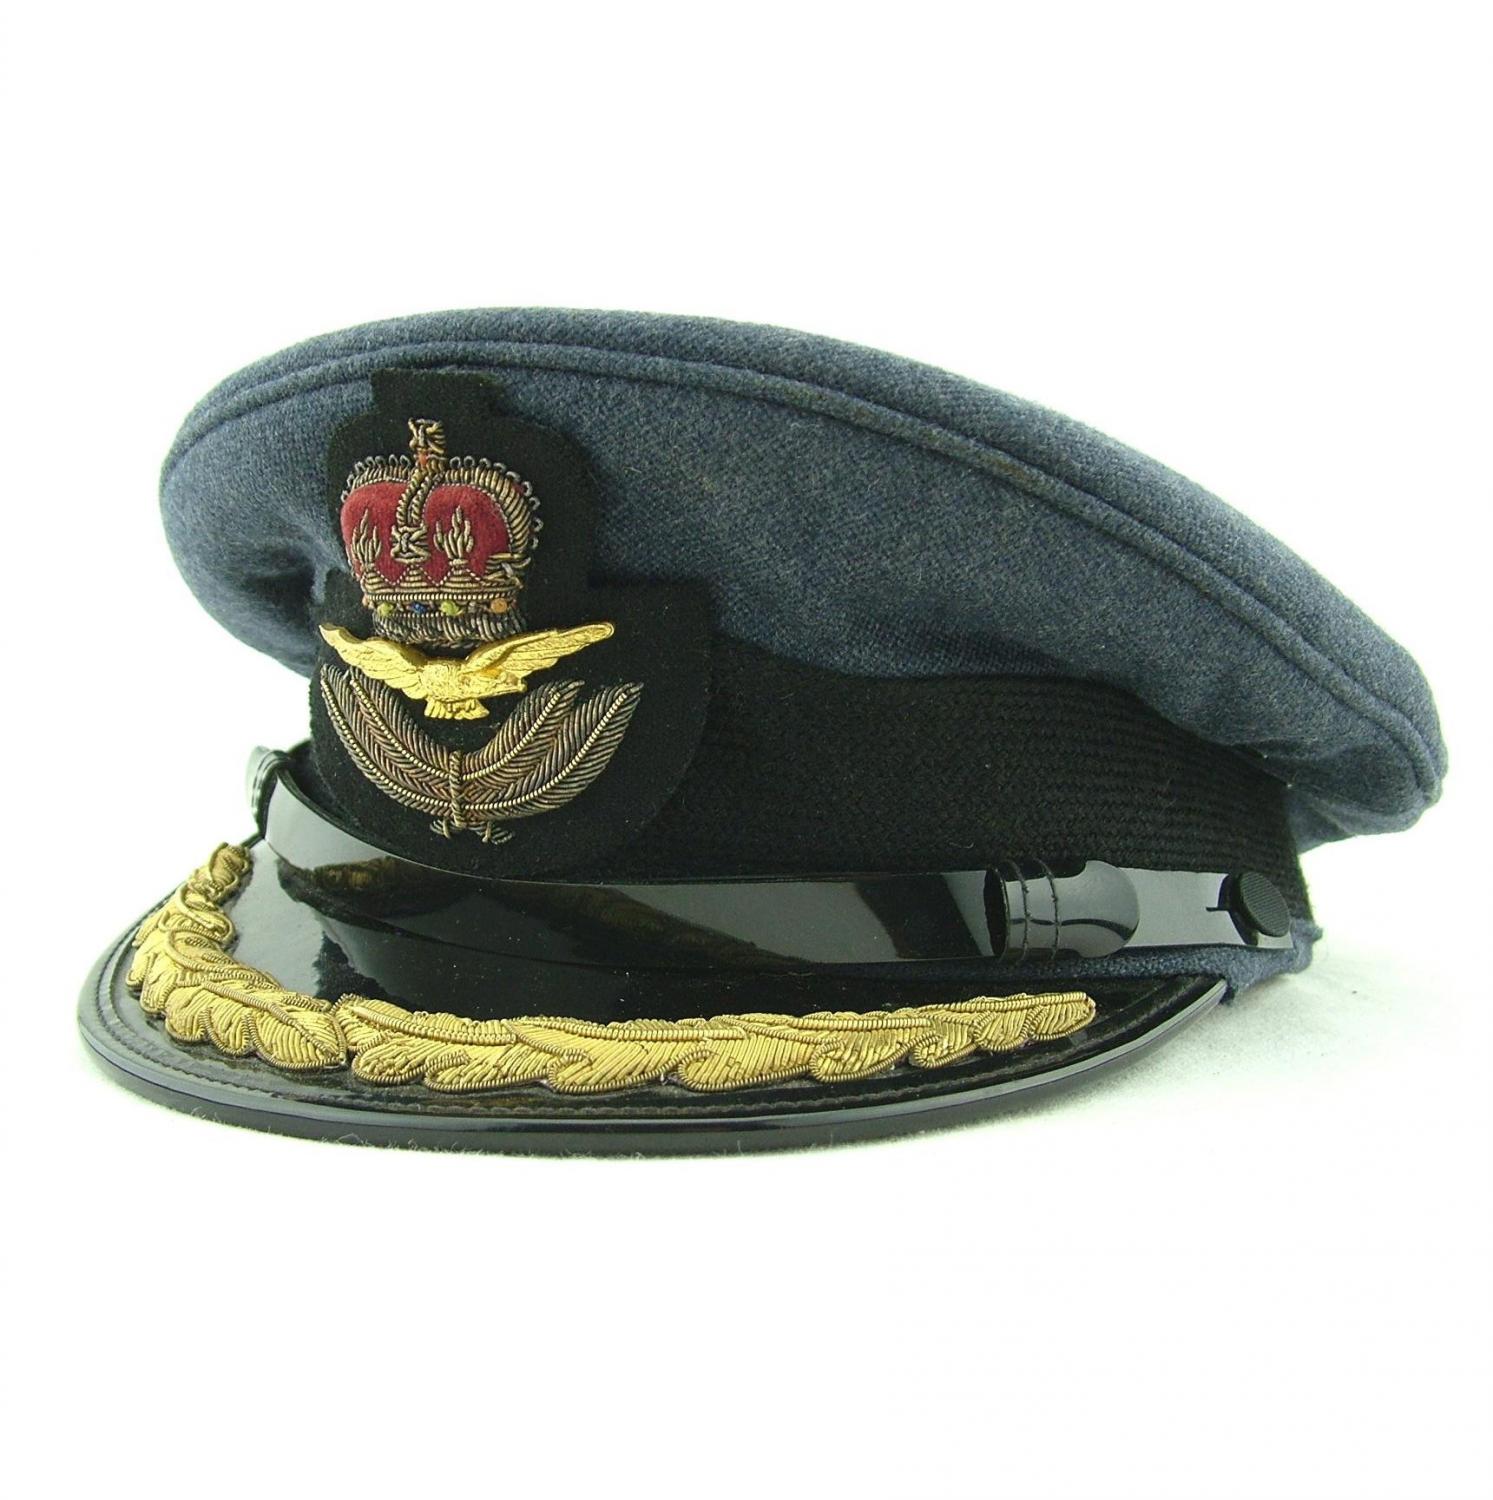 RAF Group Captain rank service dress cap